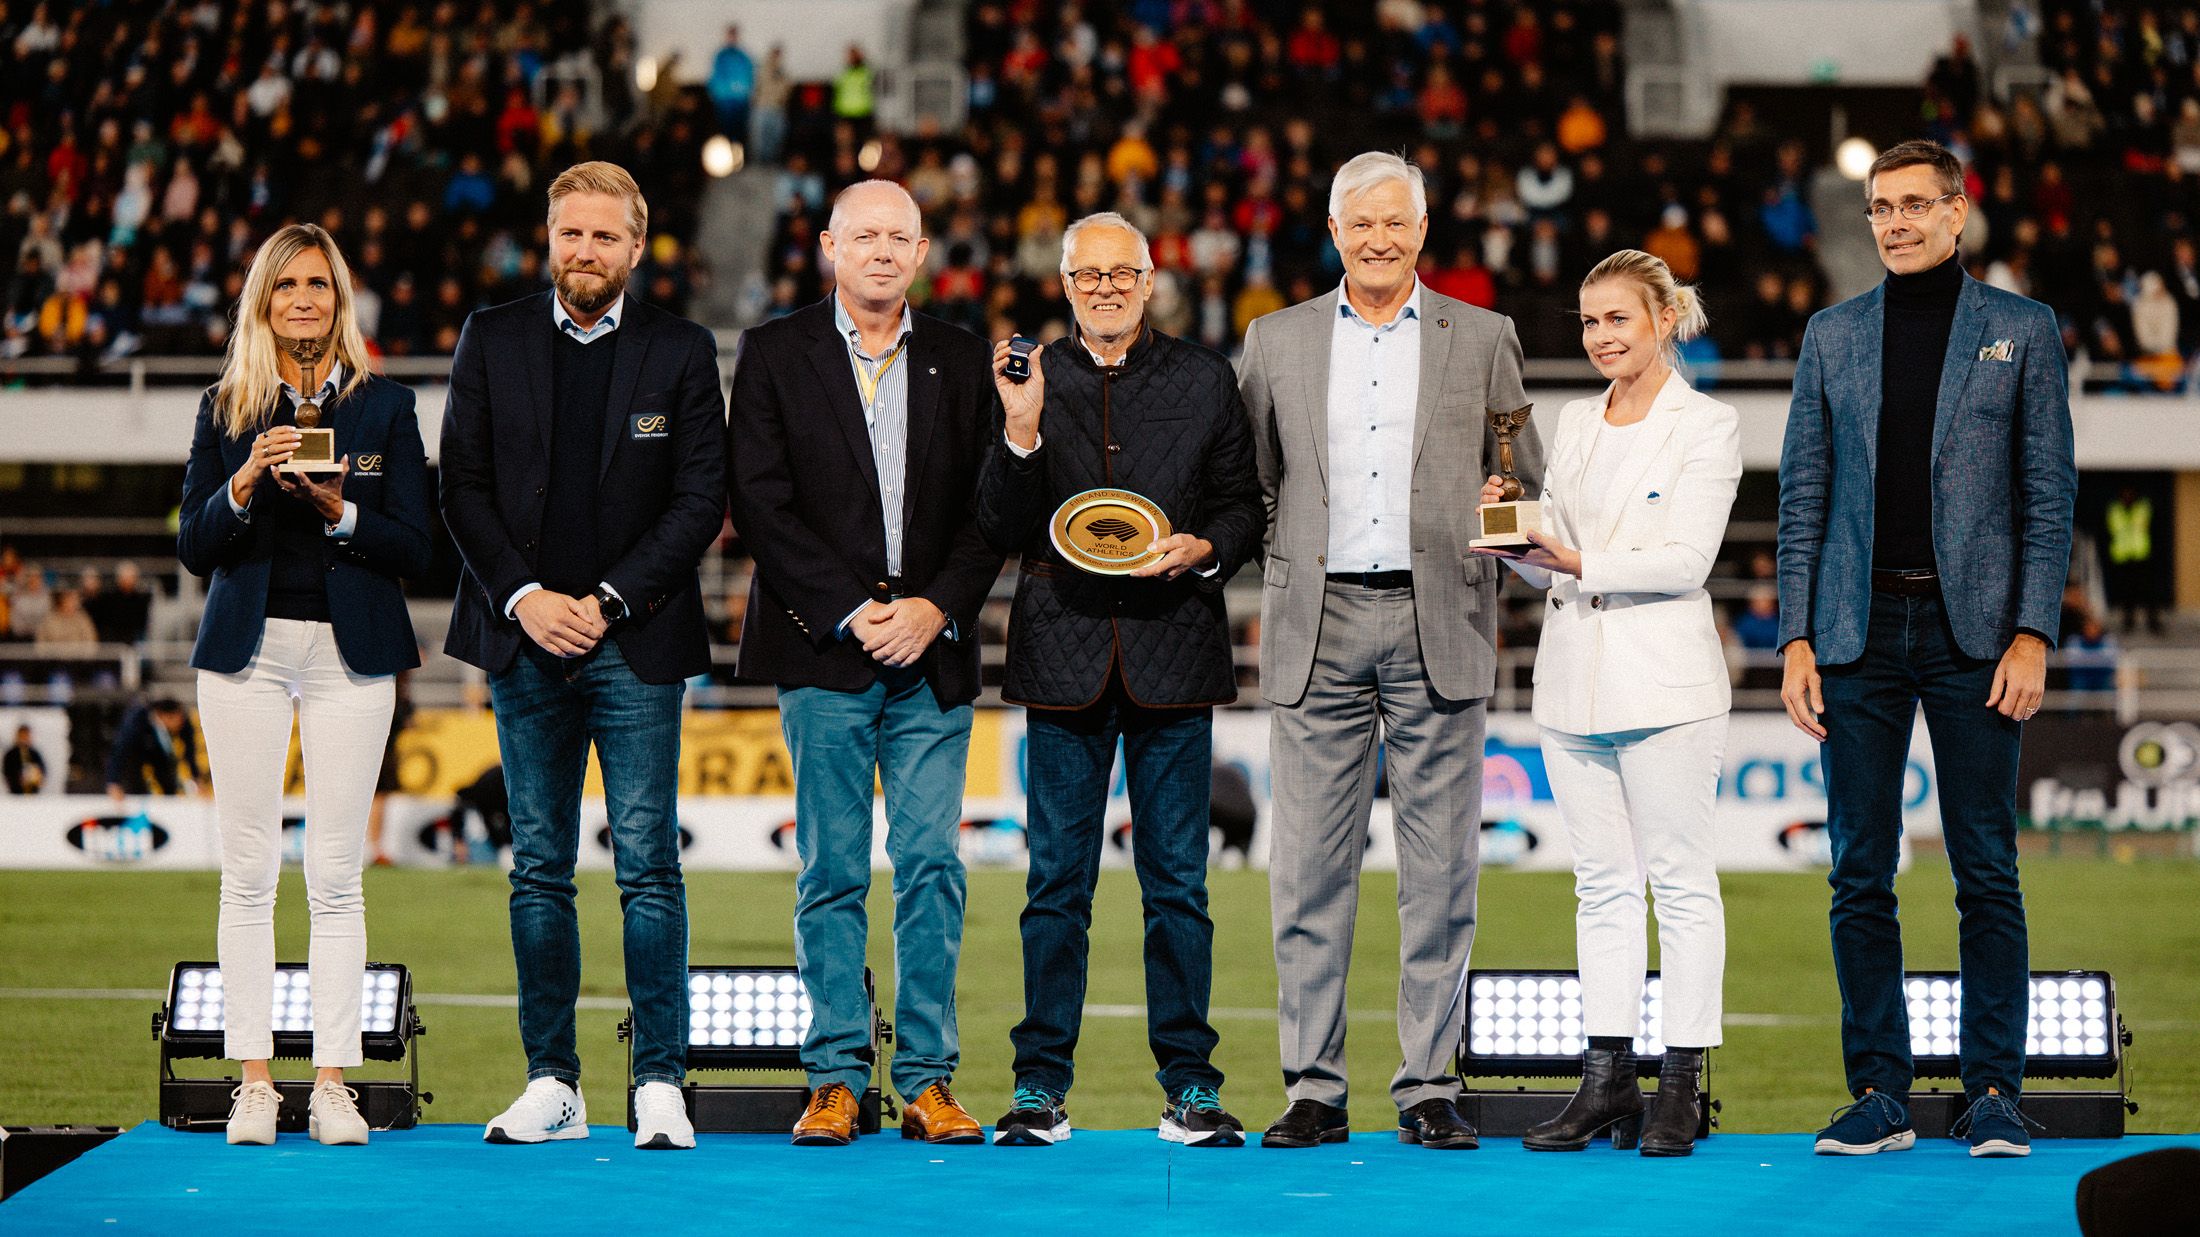 World Athletics Heritage Plaque presentation at the Finland-Sweden International Match